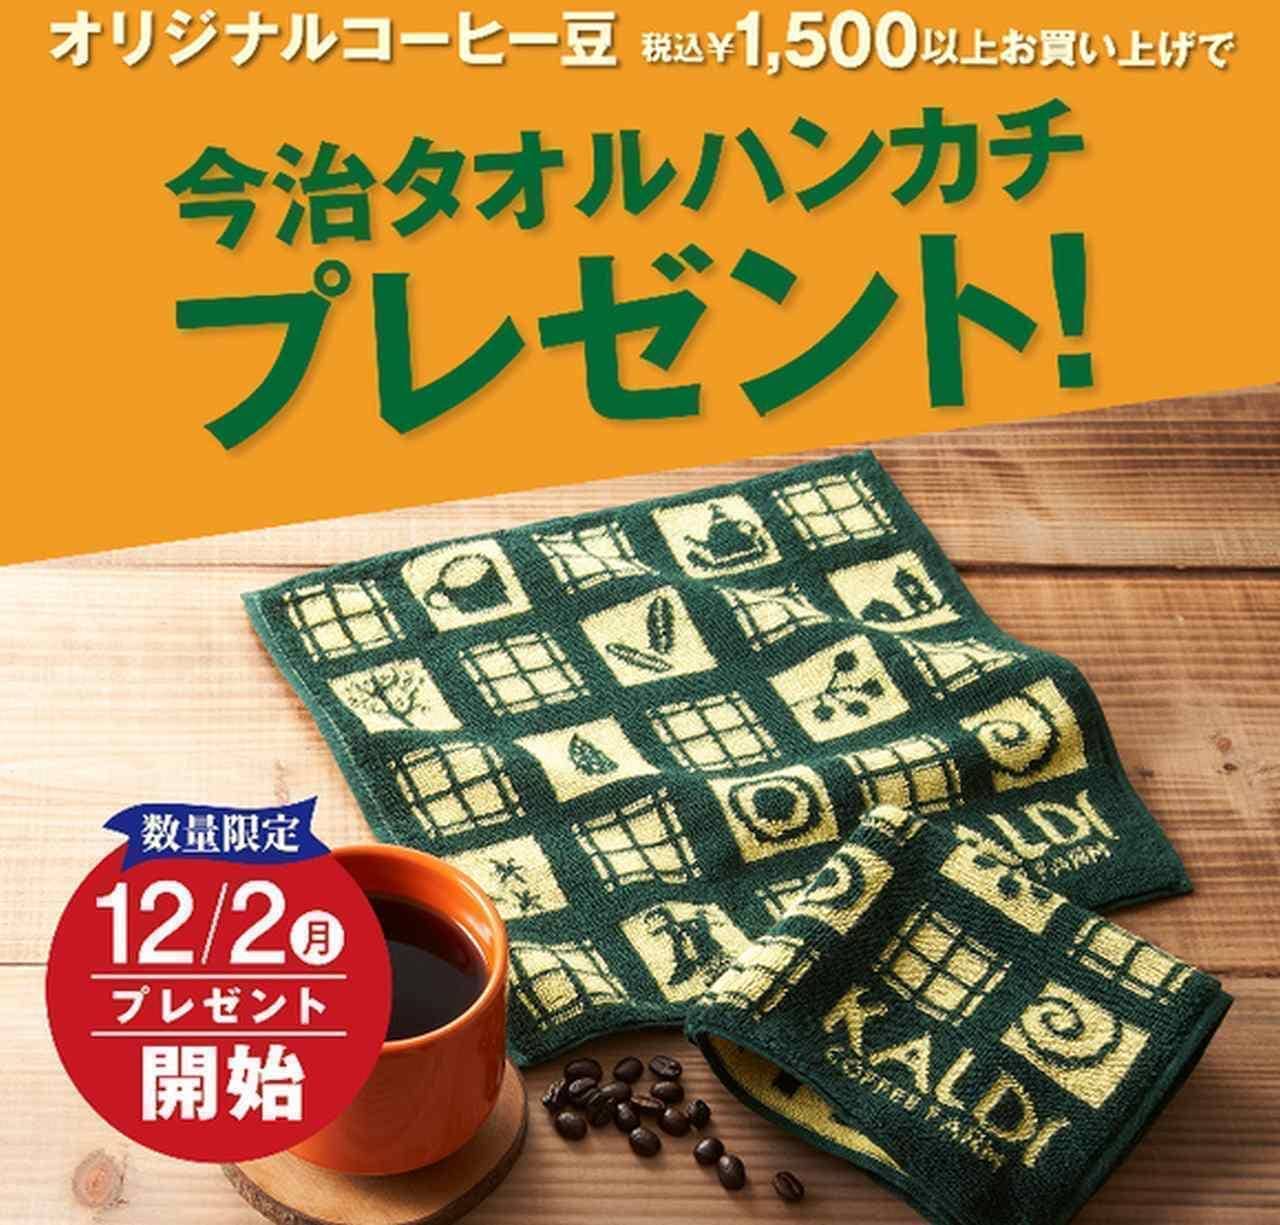 KALDI original "Imabari towel handkerchief"